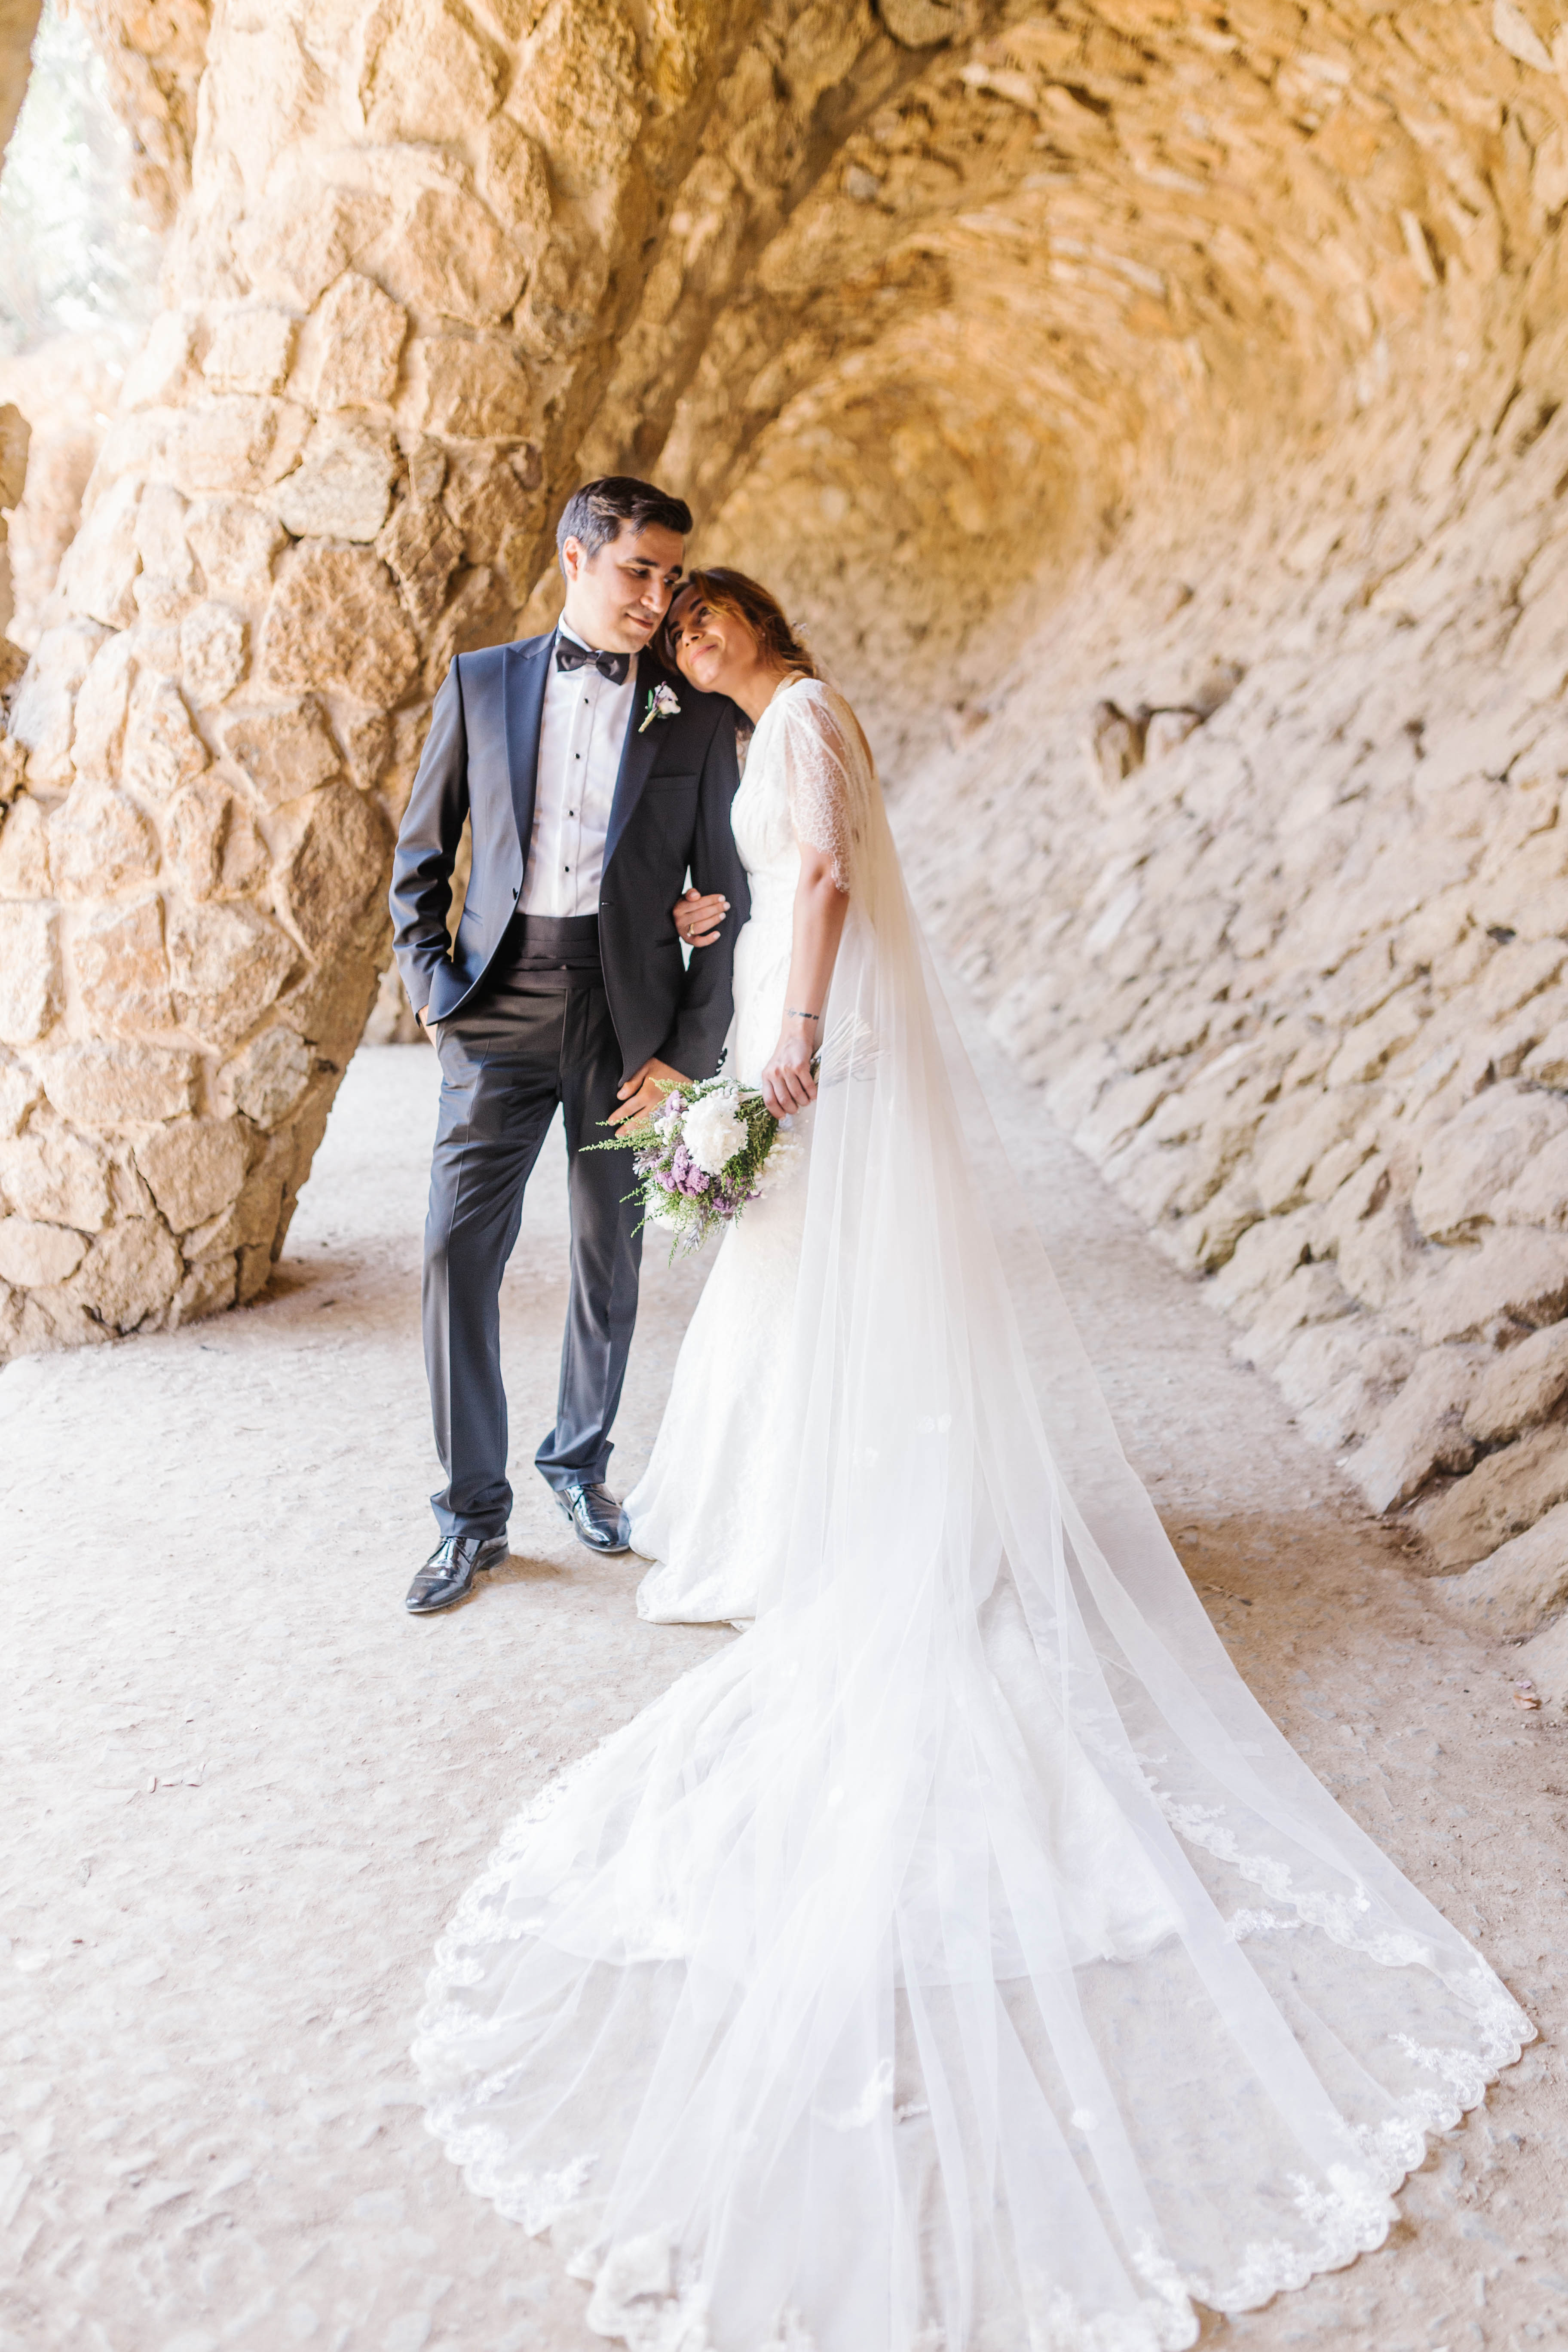 Beautiful young couple | Fin Art Photographer | Lena Karelova Photography | Barcelona Film Wedding Photographer